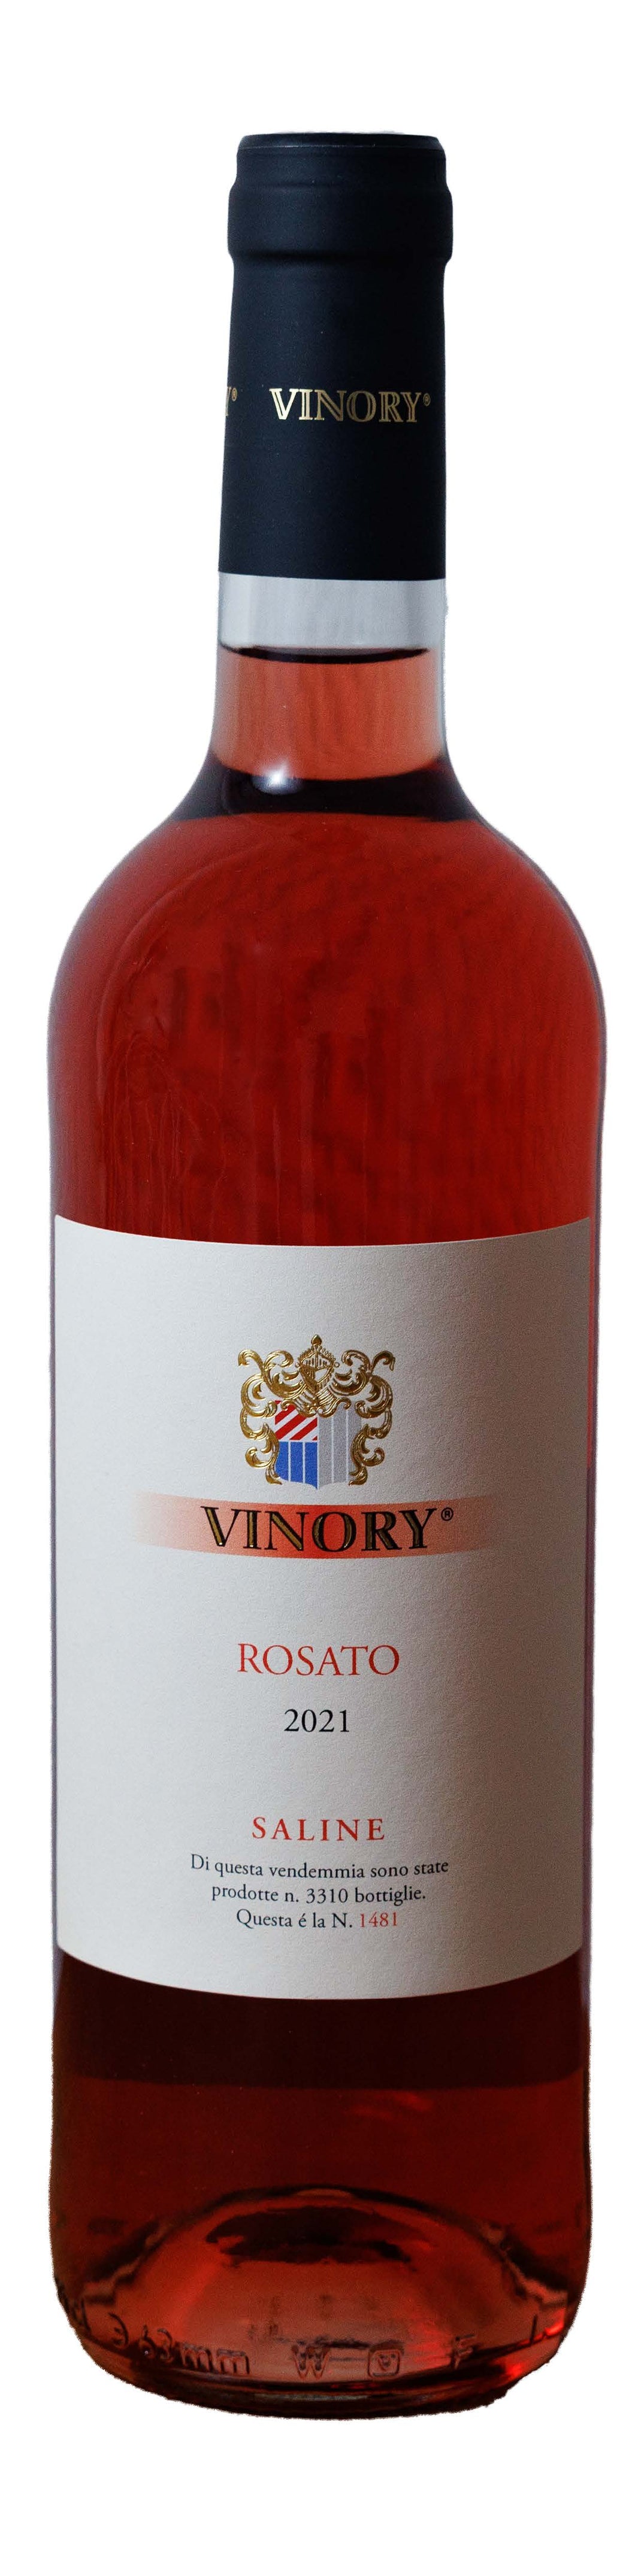 Vinory Rosato 2021 Saline